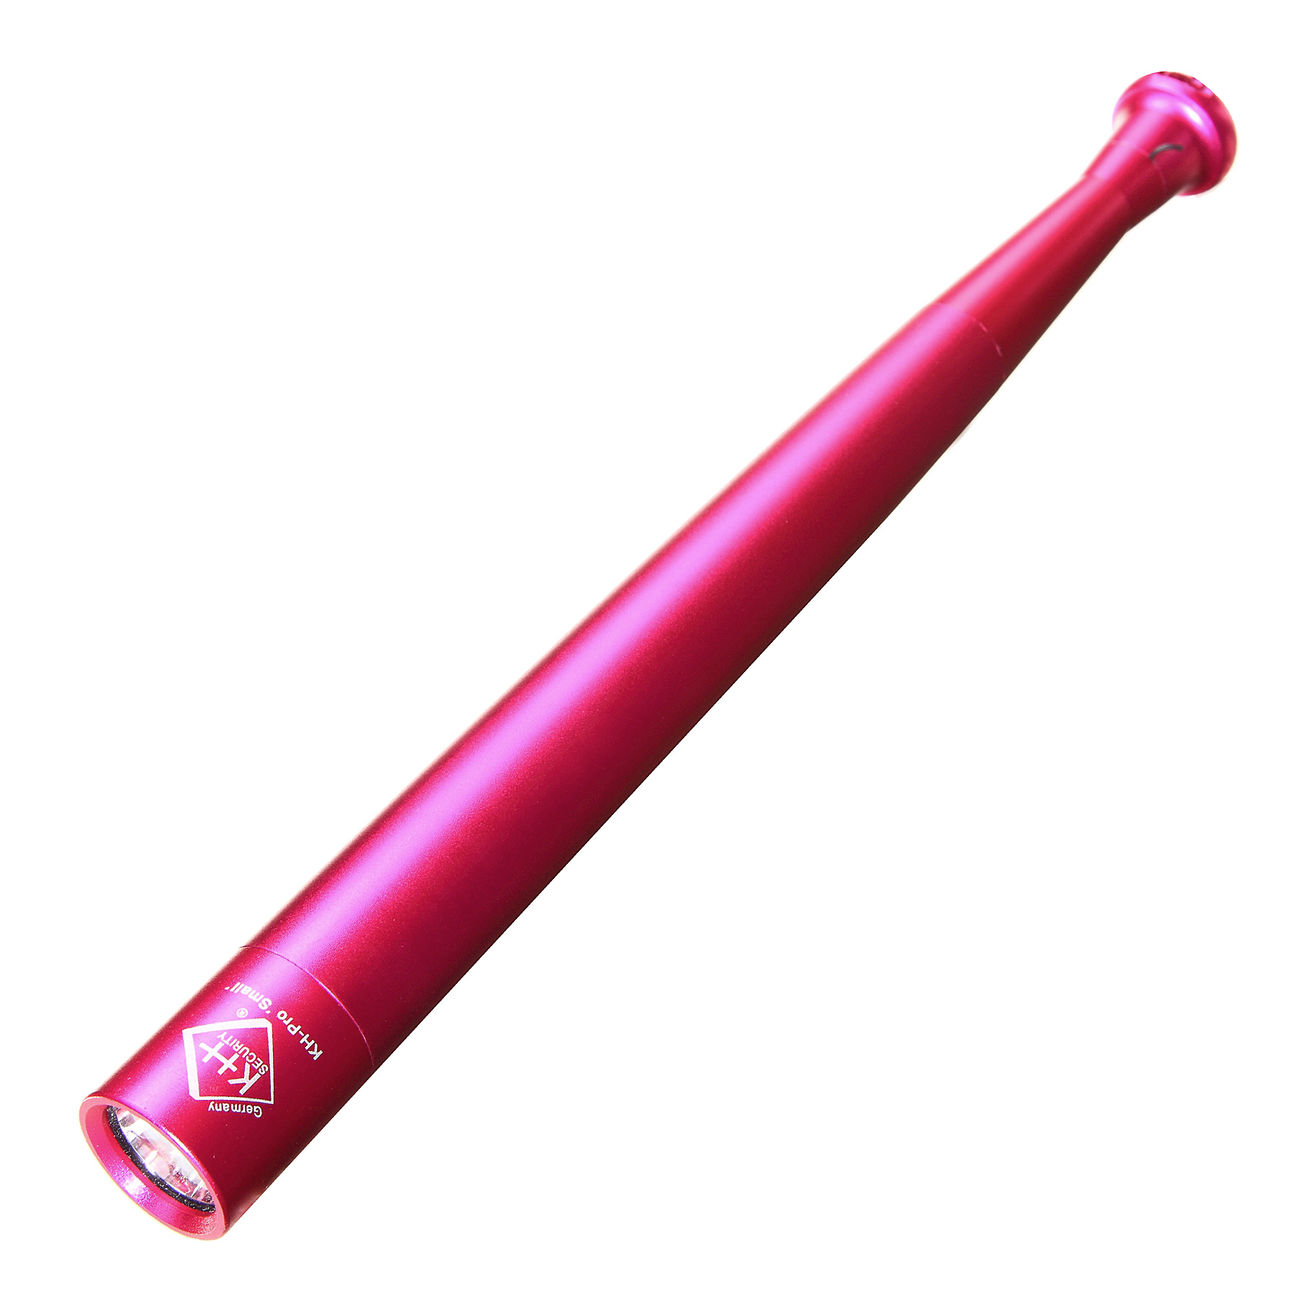 Defense LED Stablampe small pink